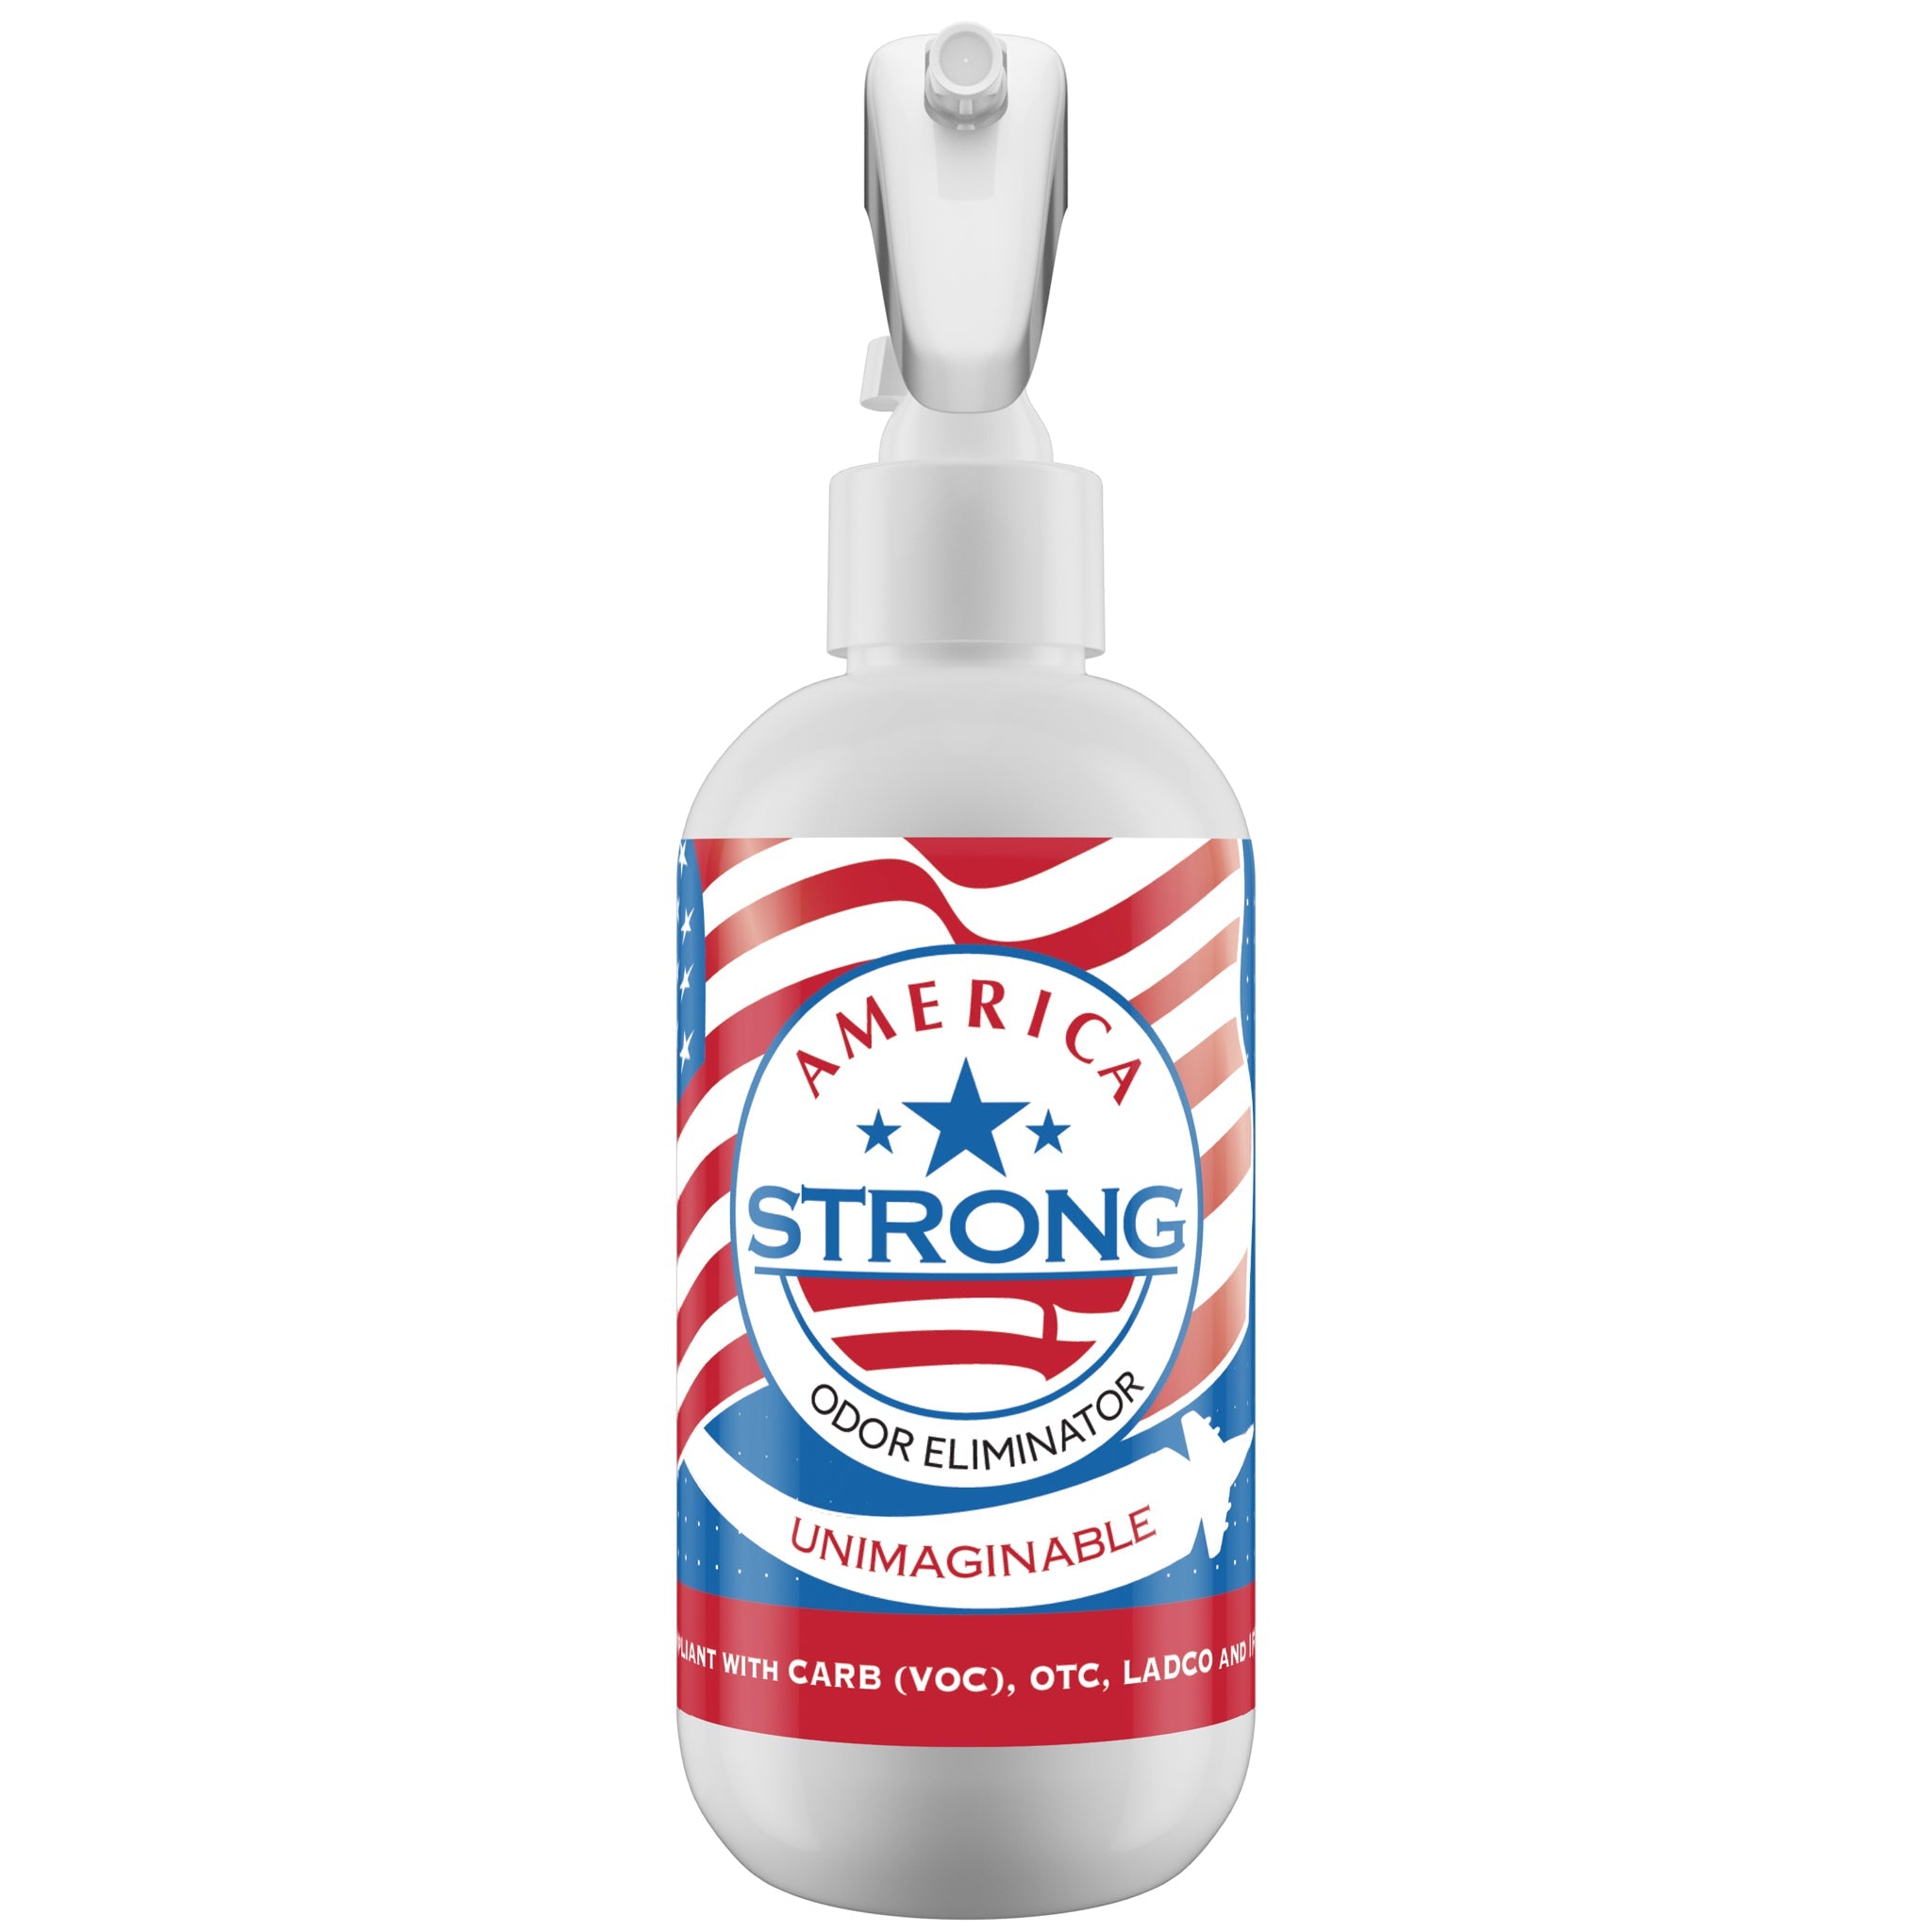 America Strong Odor Eliminator - Unimaginable Scent Size: 8.0oz